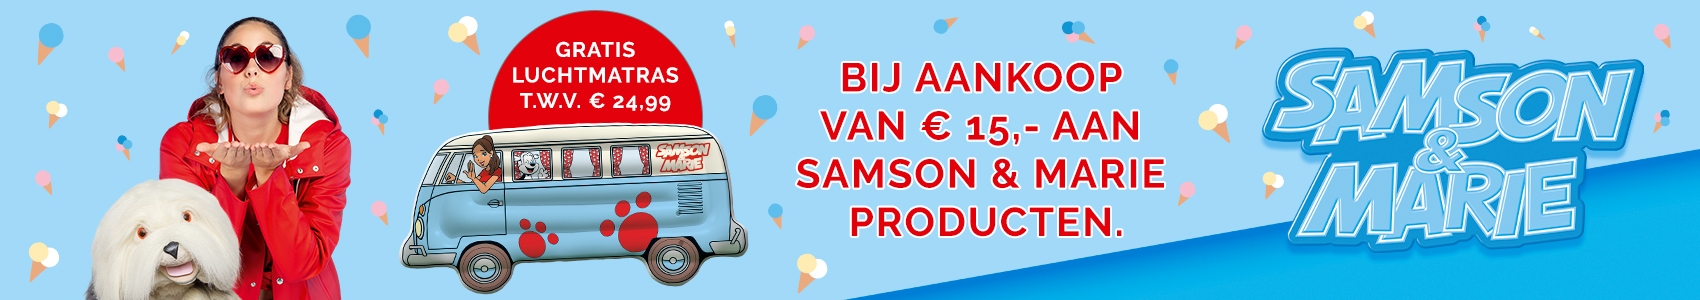 Samson en Marie - gratis luchtmatras vanaf € 15,00